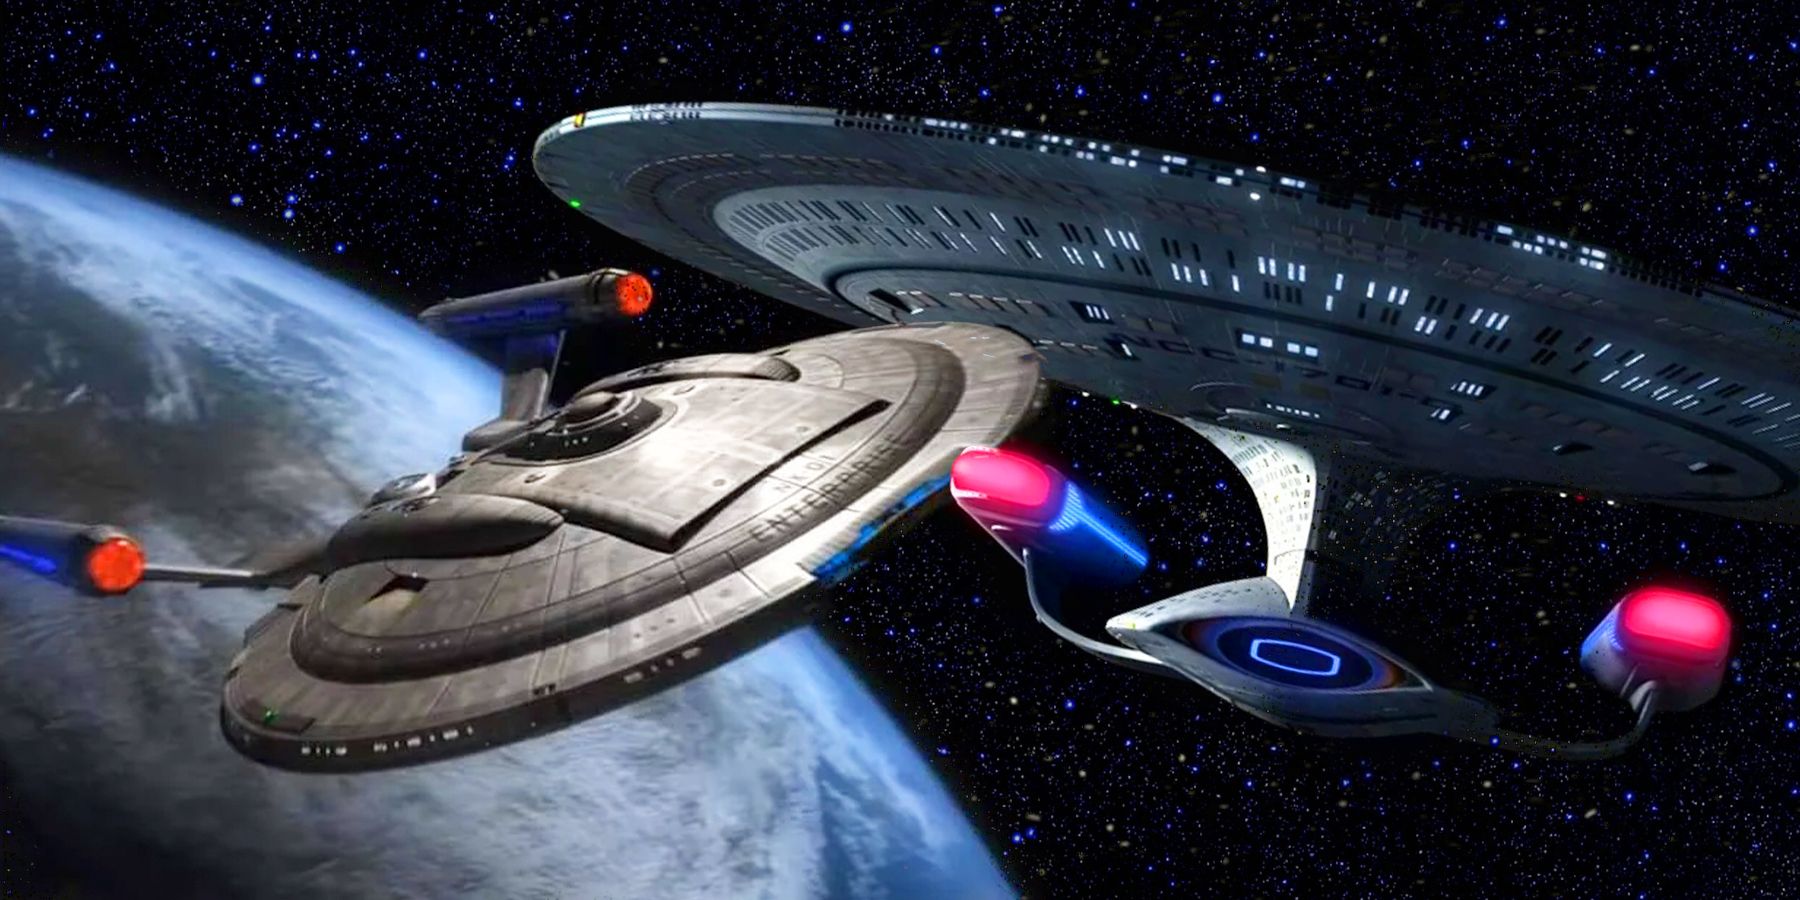 enterprise star trek number